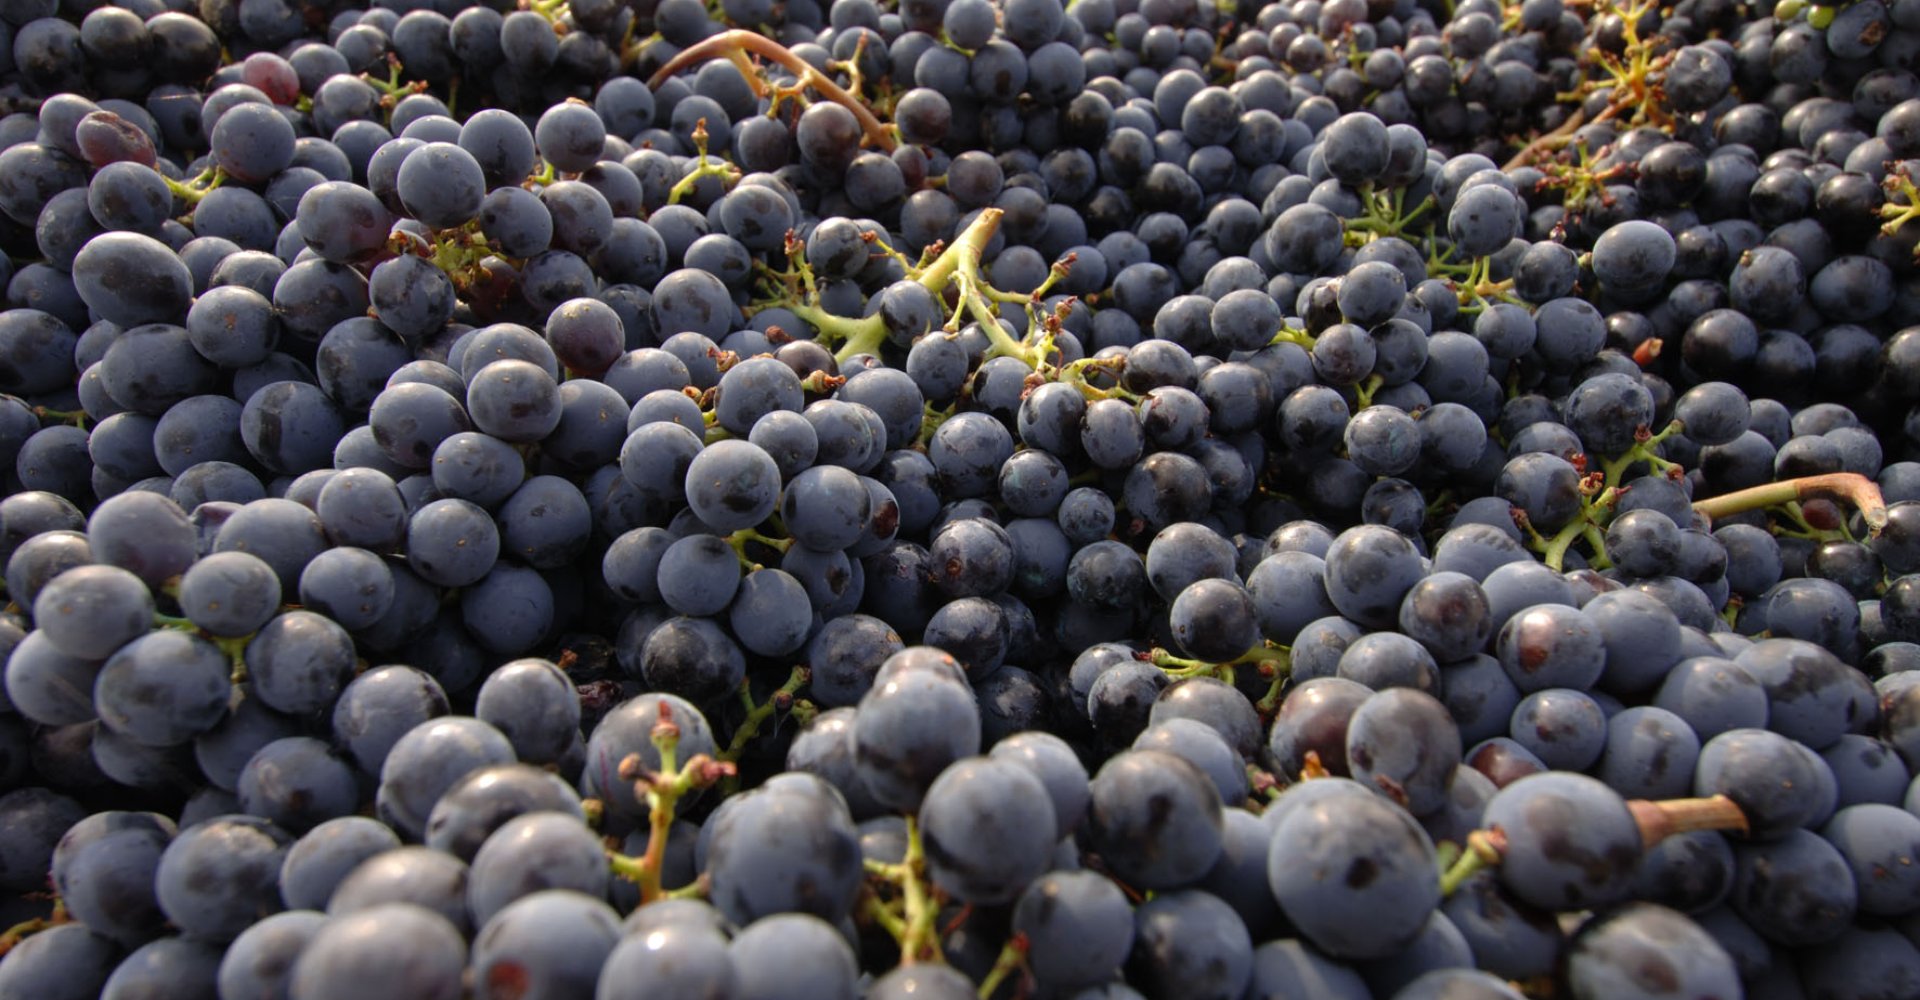 Grapes Tuscany